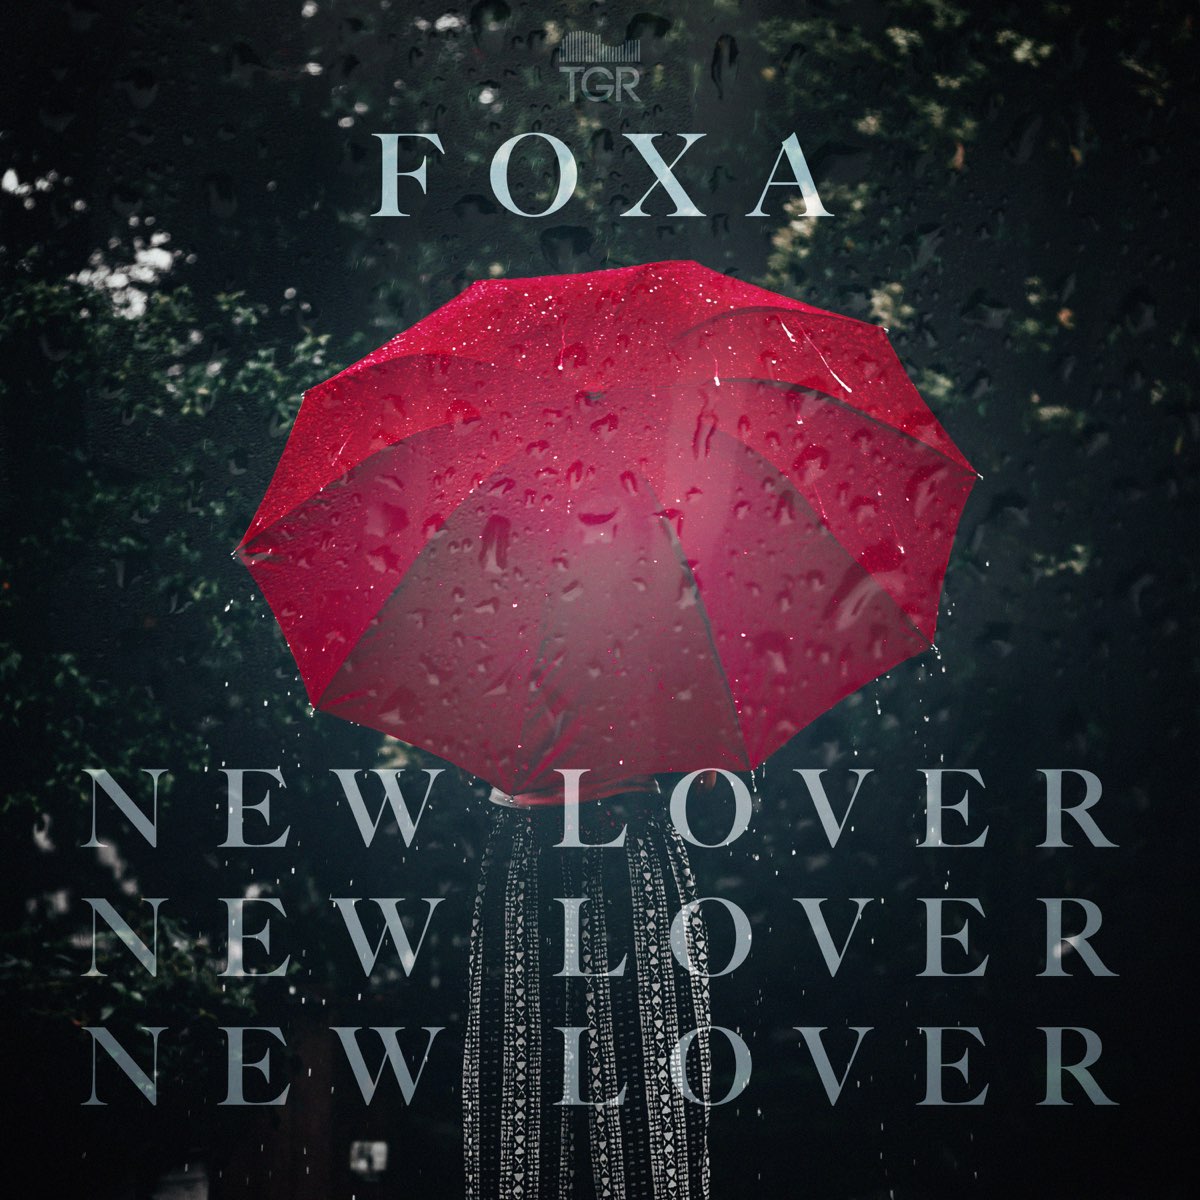 Foxa us. New Love. New love new life